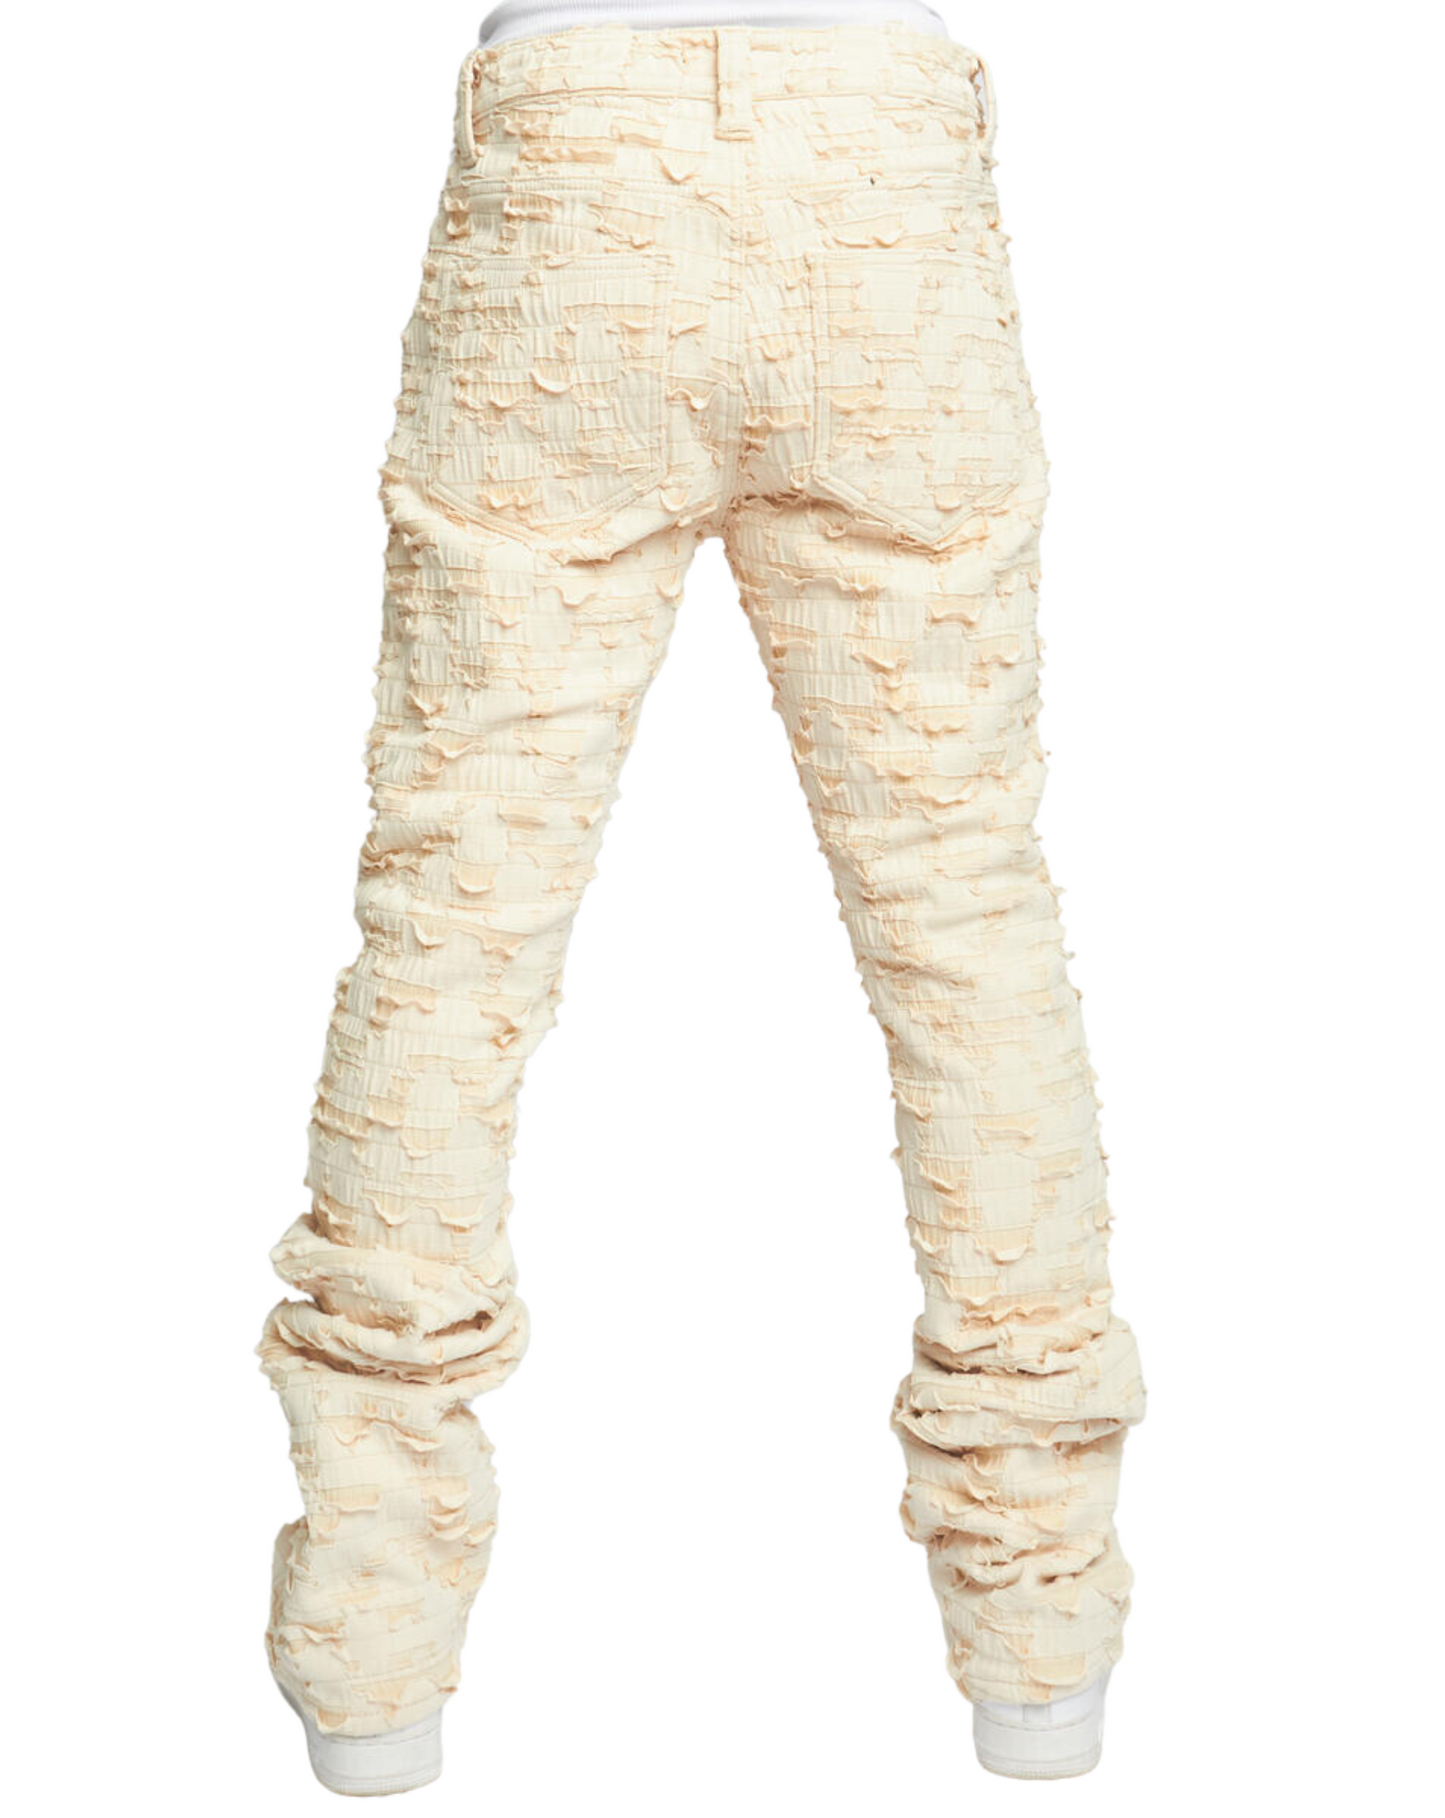 Lucas 501 Shredded Stacked Flare Jeans